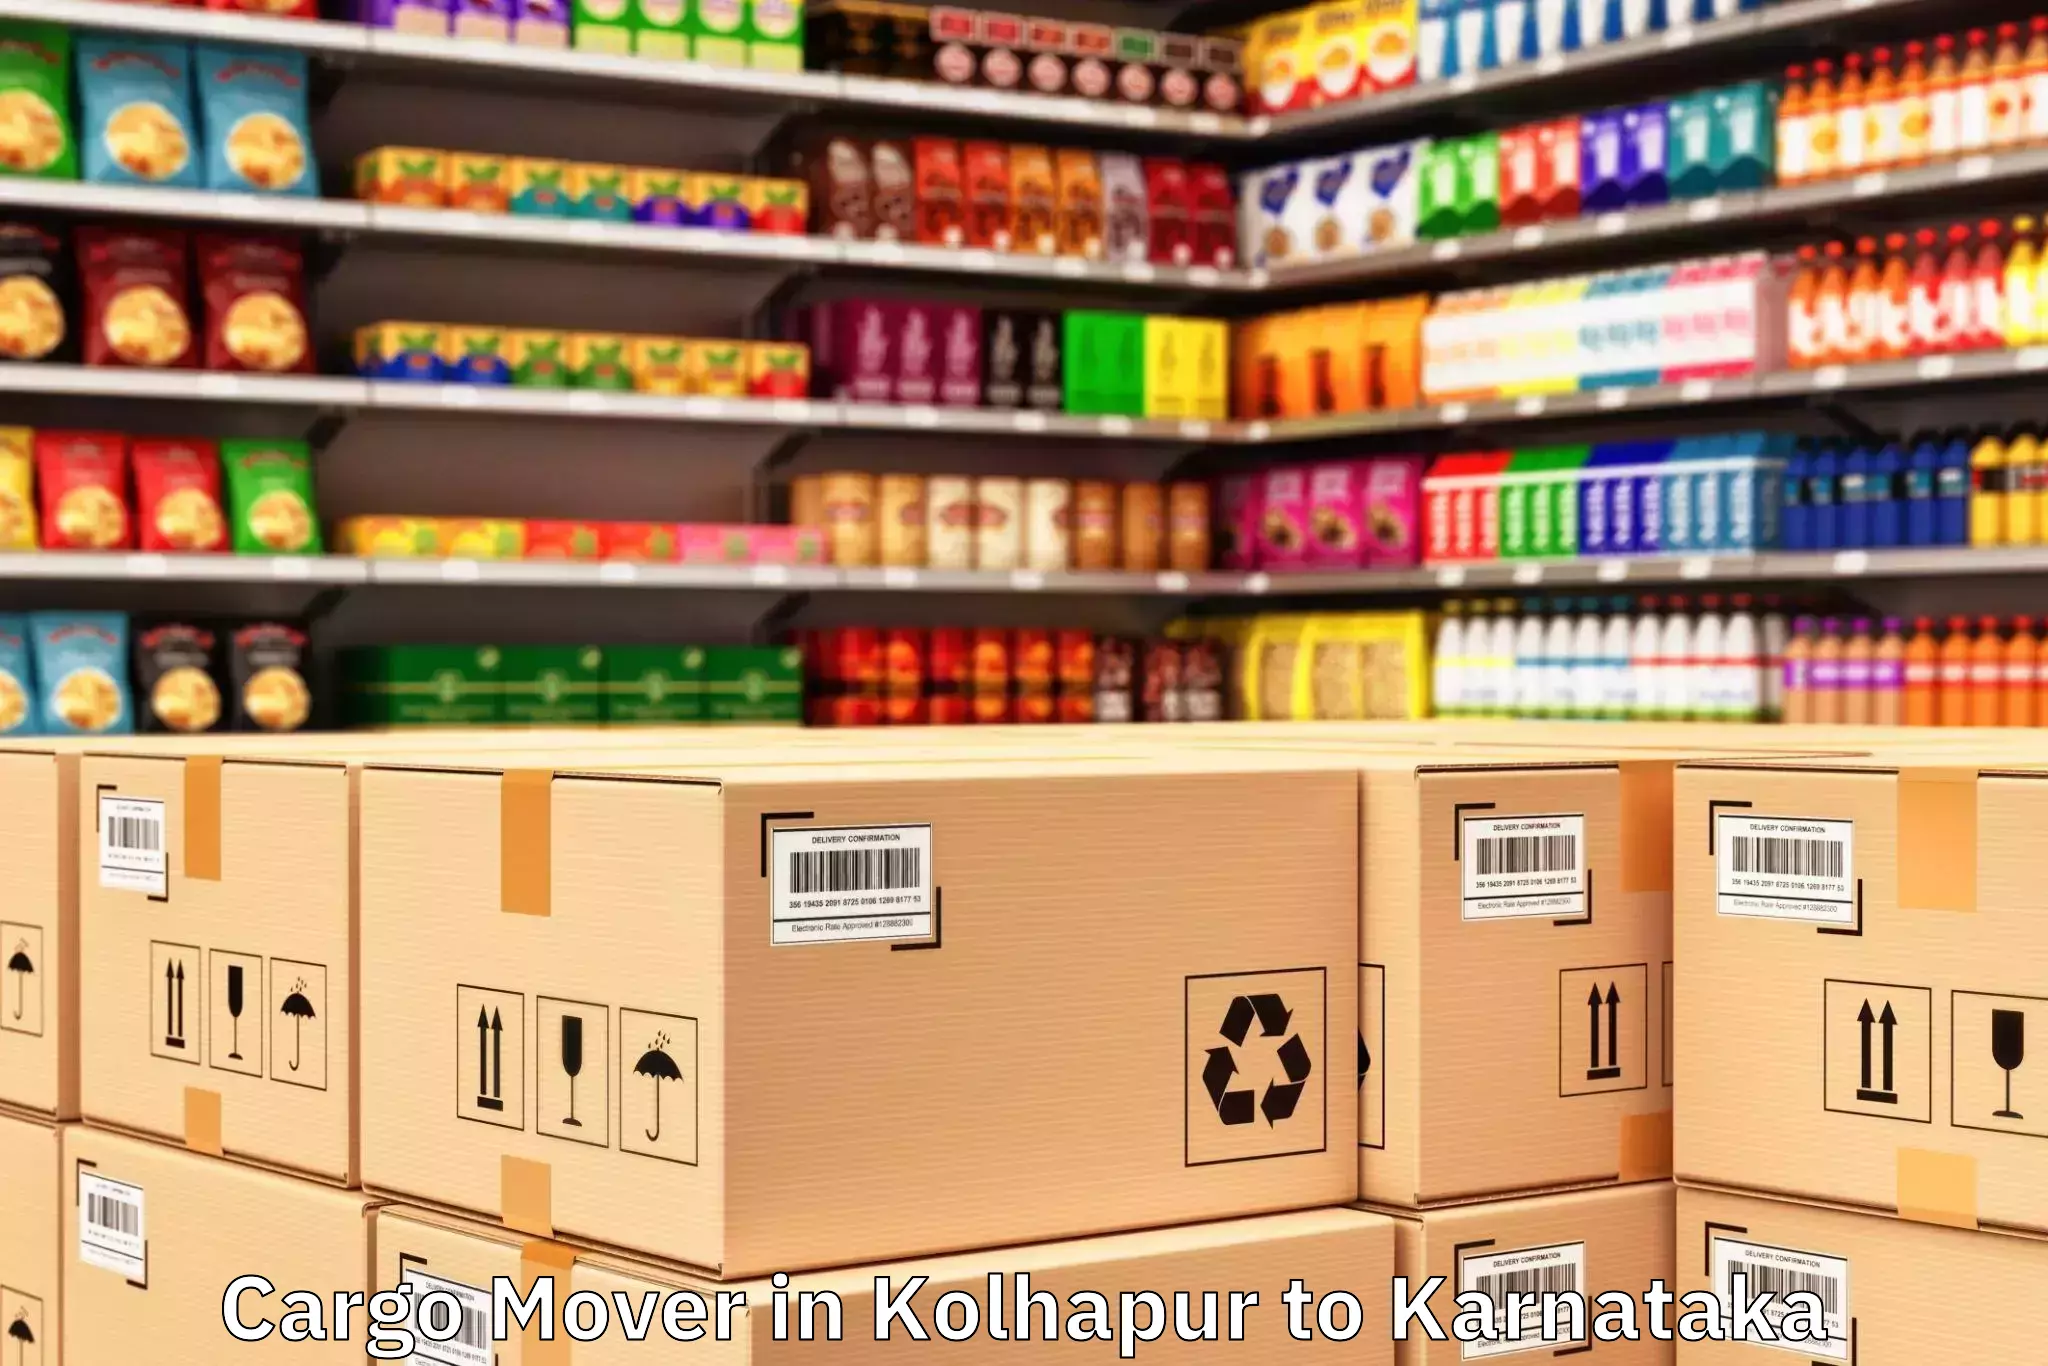 Quality Kolhapur to Bengaluru Cargo Mover